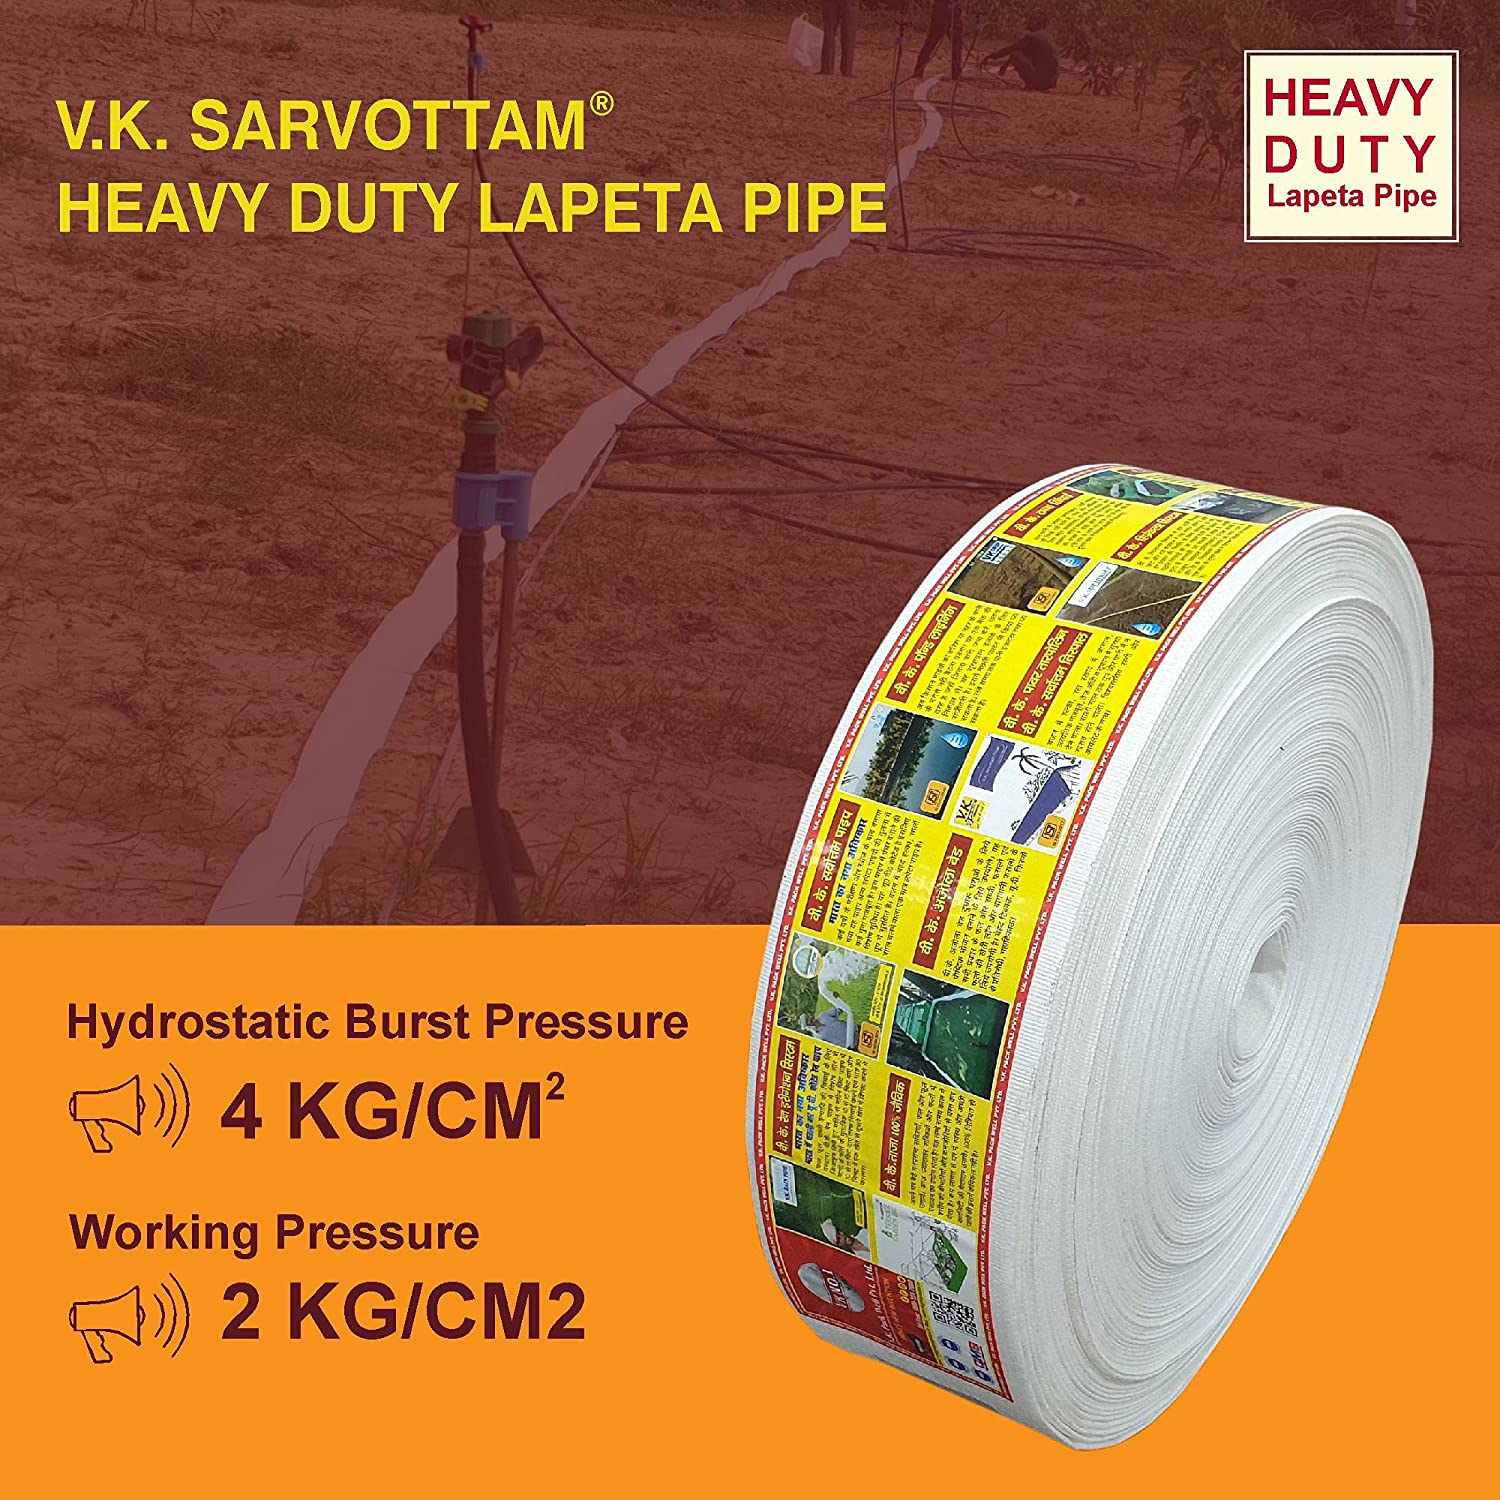 V.K. Sarvottam Heavy Duty HDPE Lapeta Pipe (60 Meter)